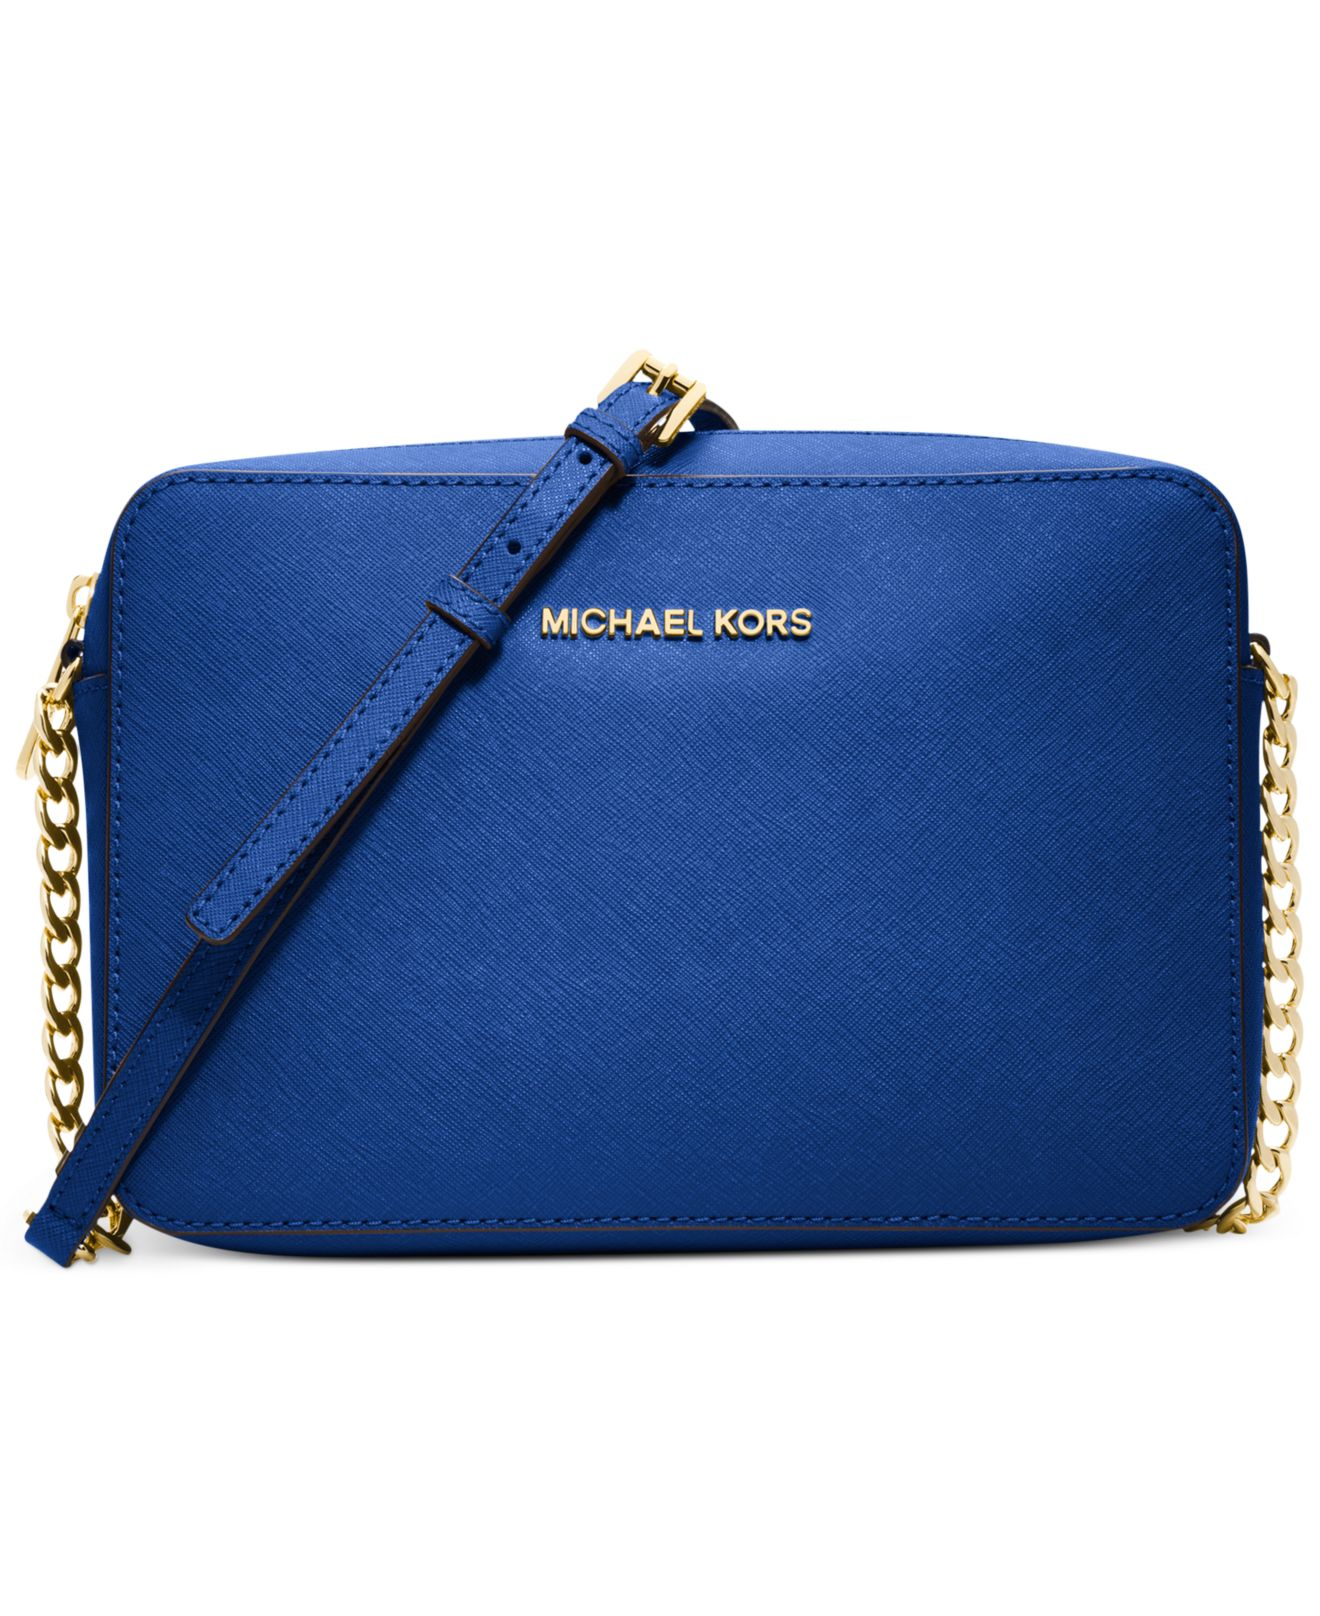 Michael Kors Studio Ginny Medium Bag - Natural & Electric Blue: Handbags:  Amazon.com